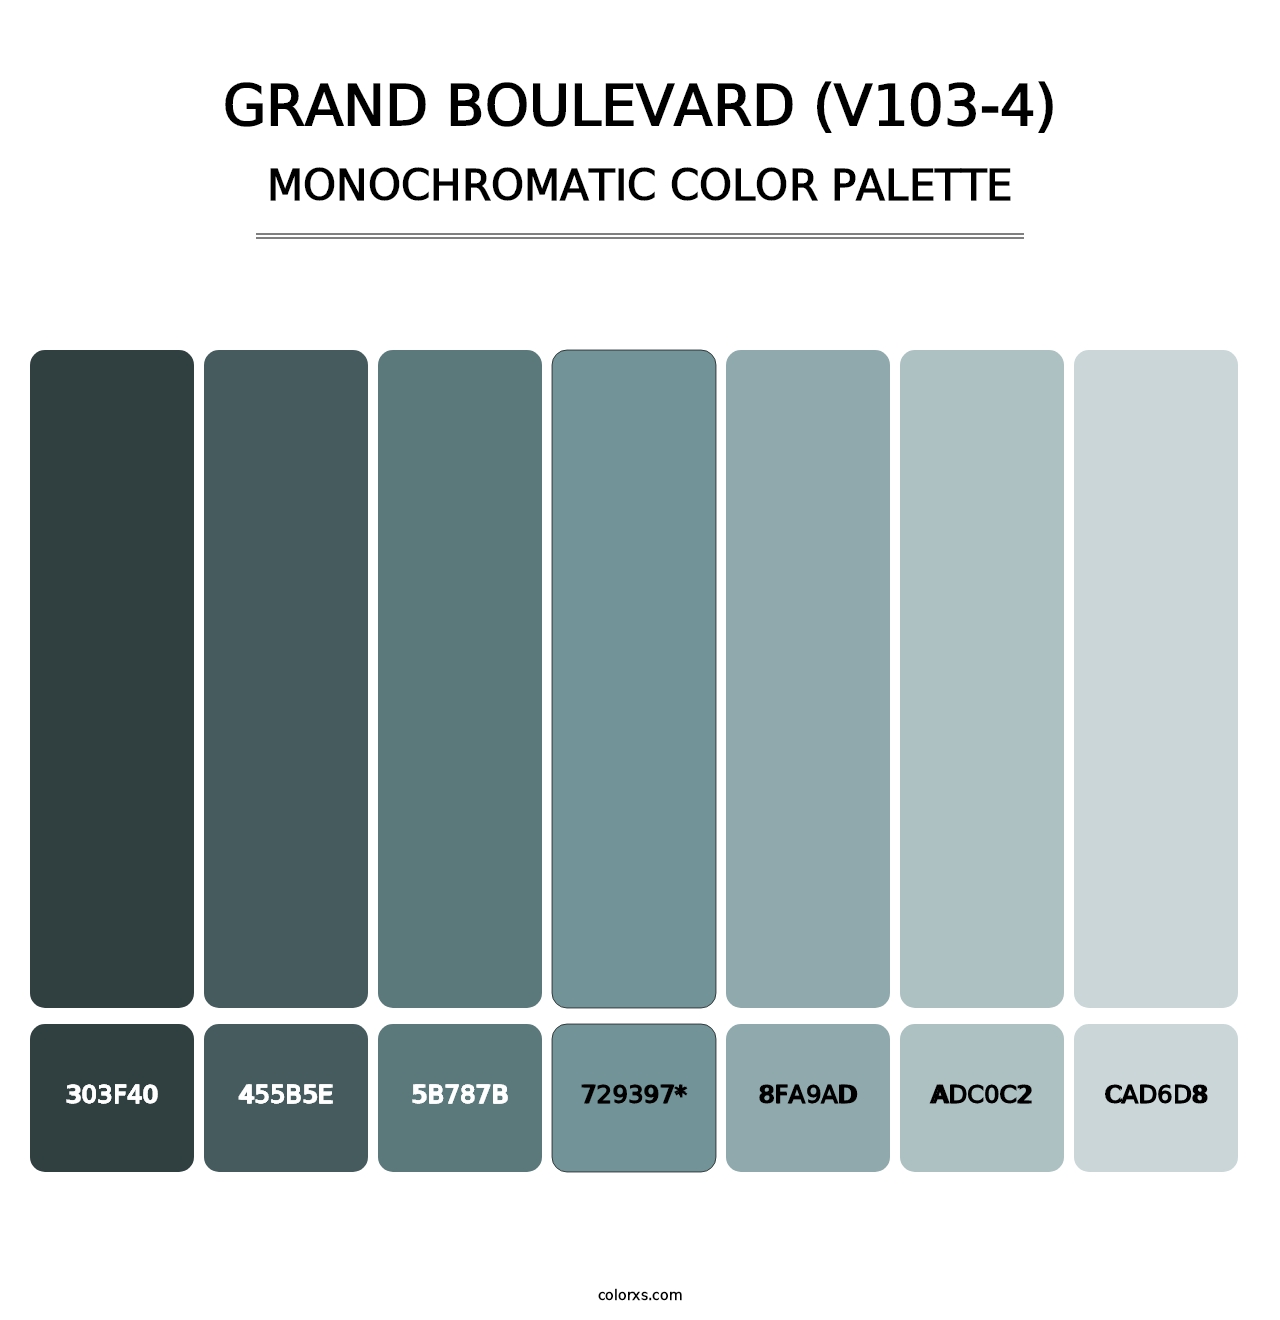 Grand Boulevard (V103-4) - Monochromatic Color Palette